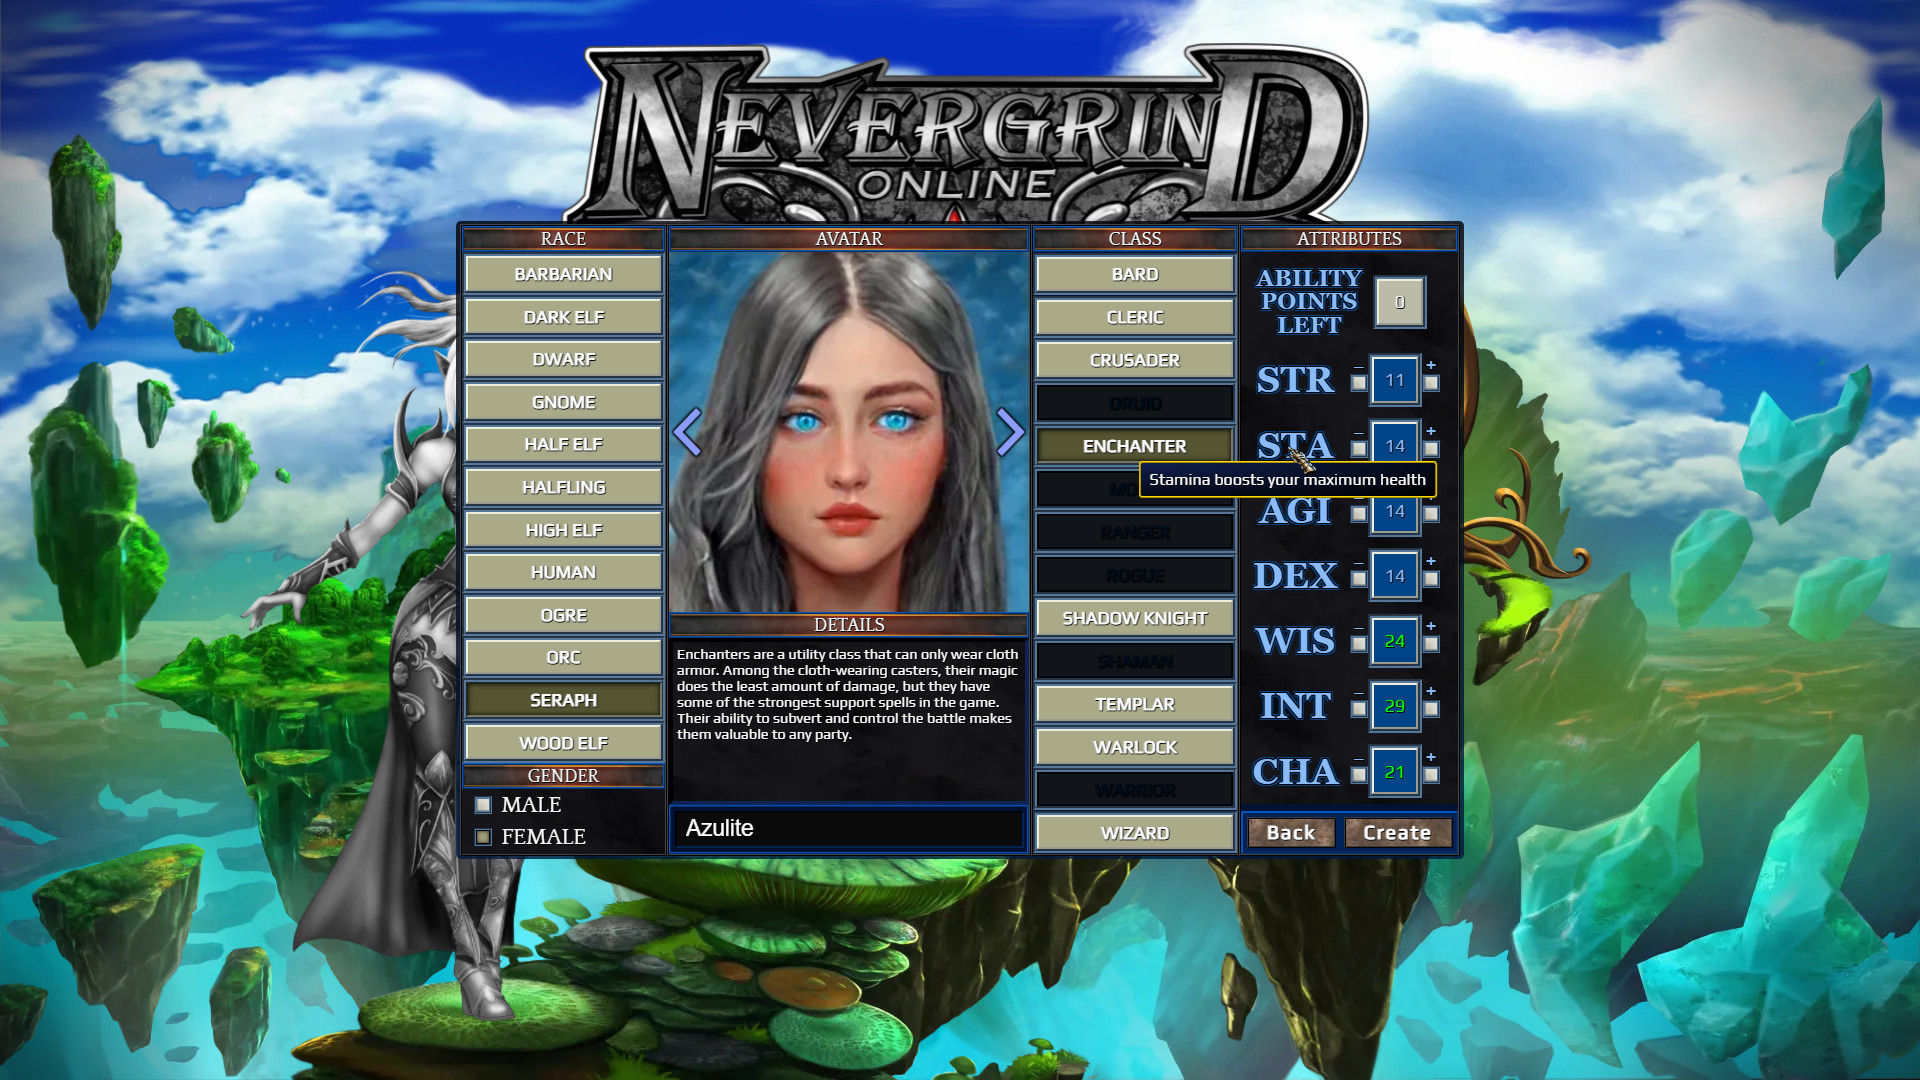 Nevergrind Online on Steam